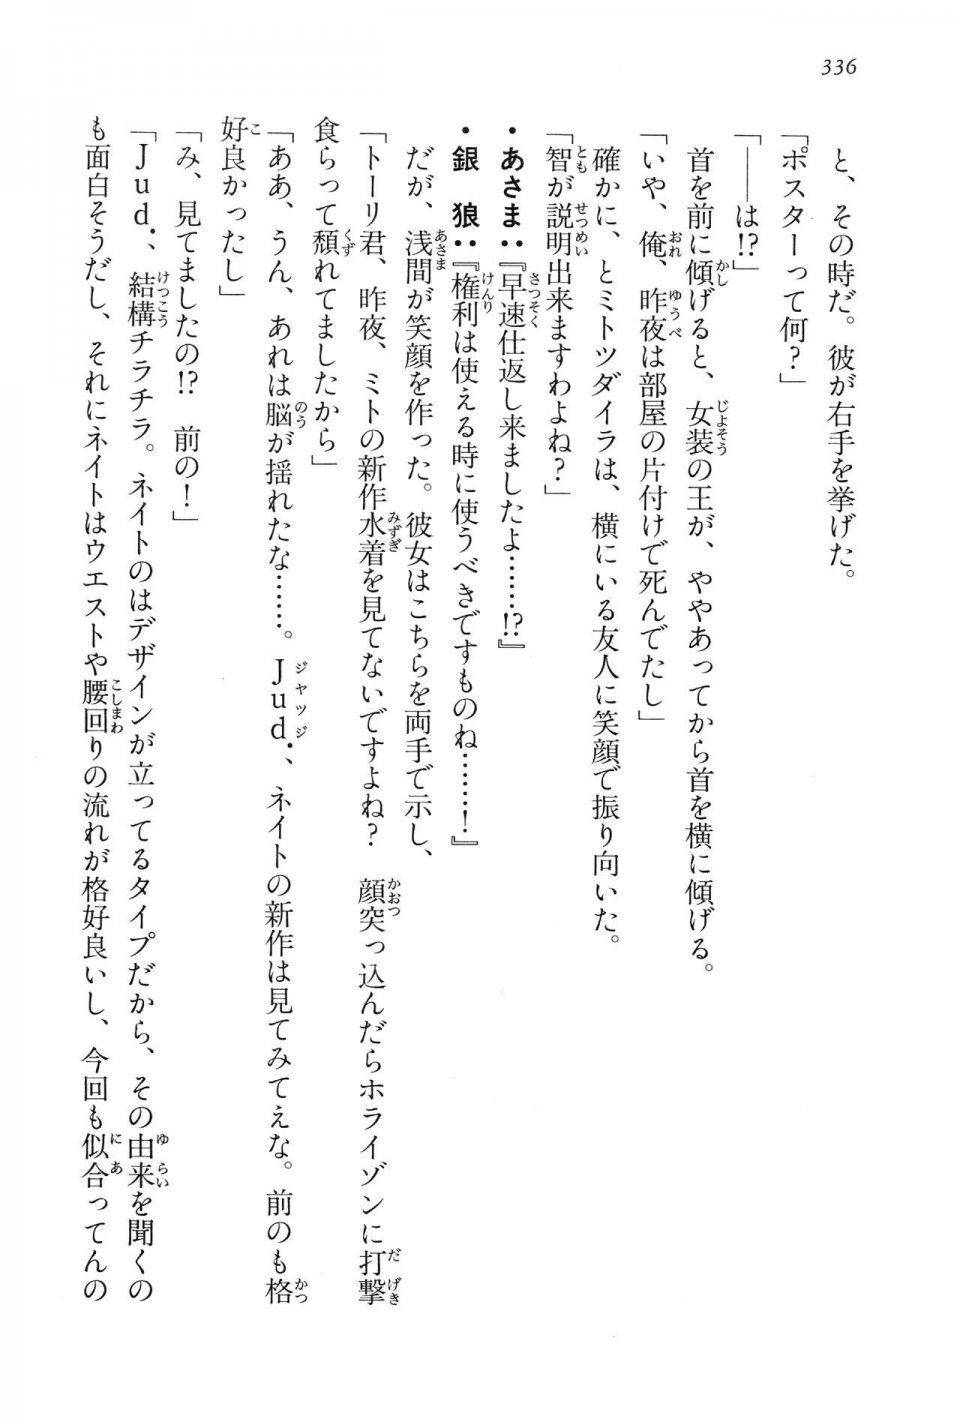 Kyoukai Senjou no Horizon LN Vol 15(6C) Part 1 - Photo #336